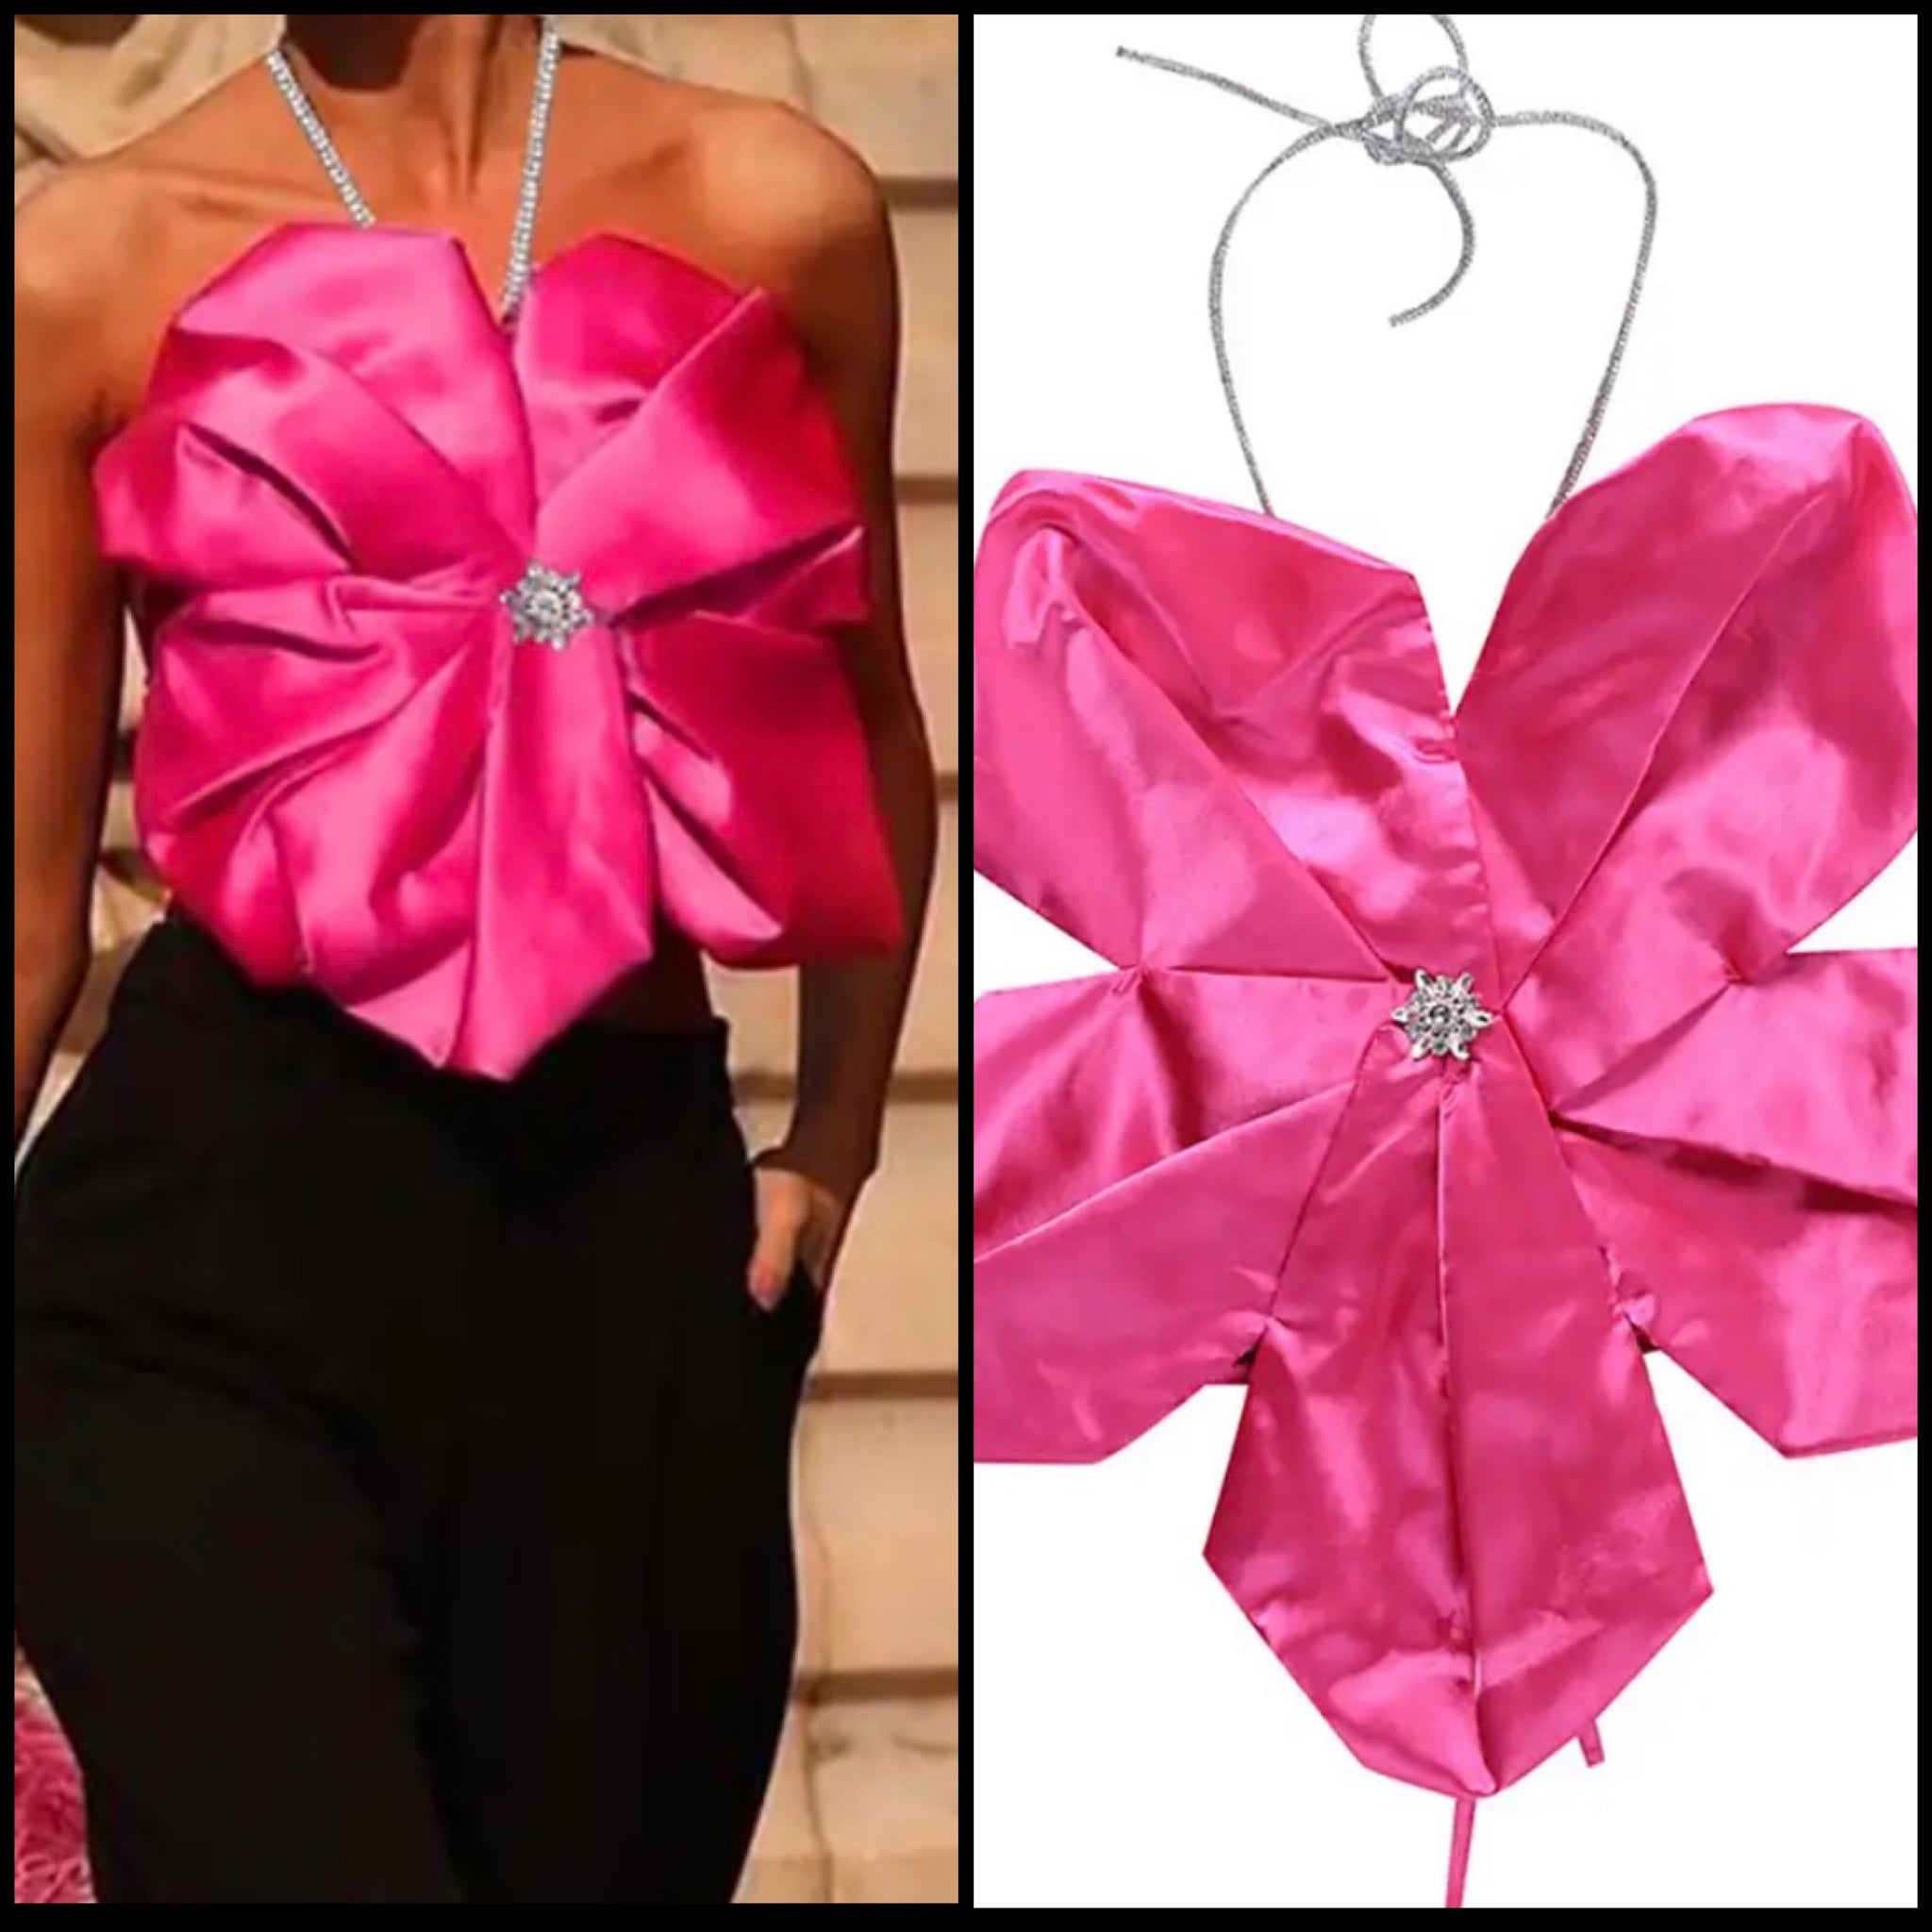 Women Fashion Pink Bow Bling Halter Crop Top